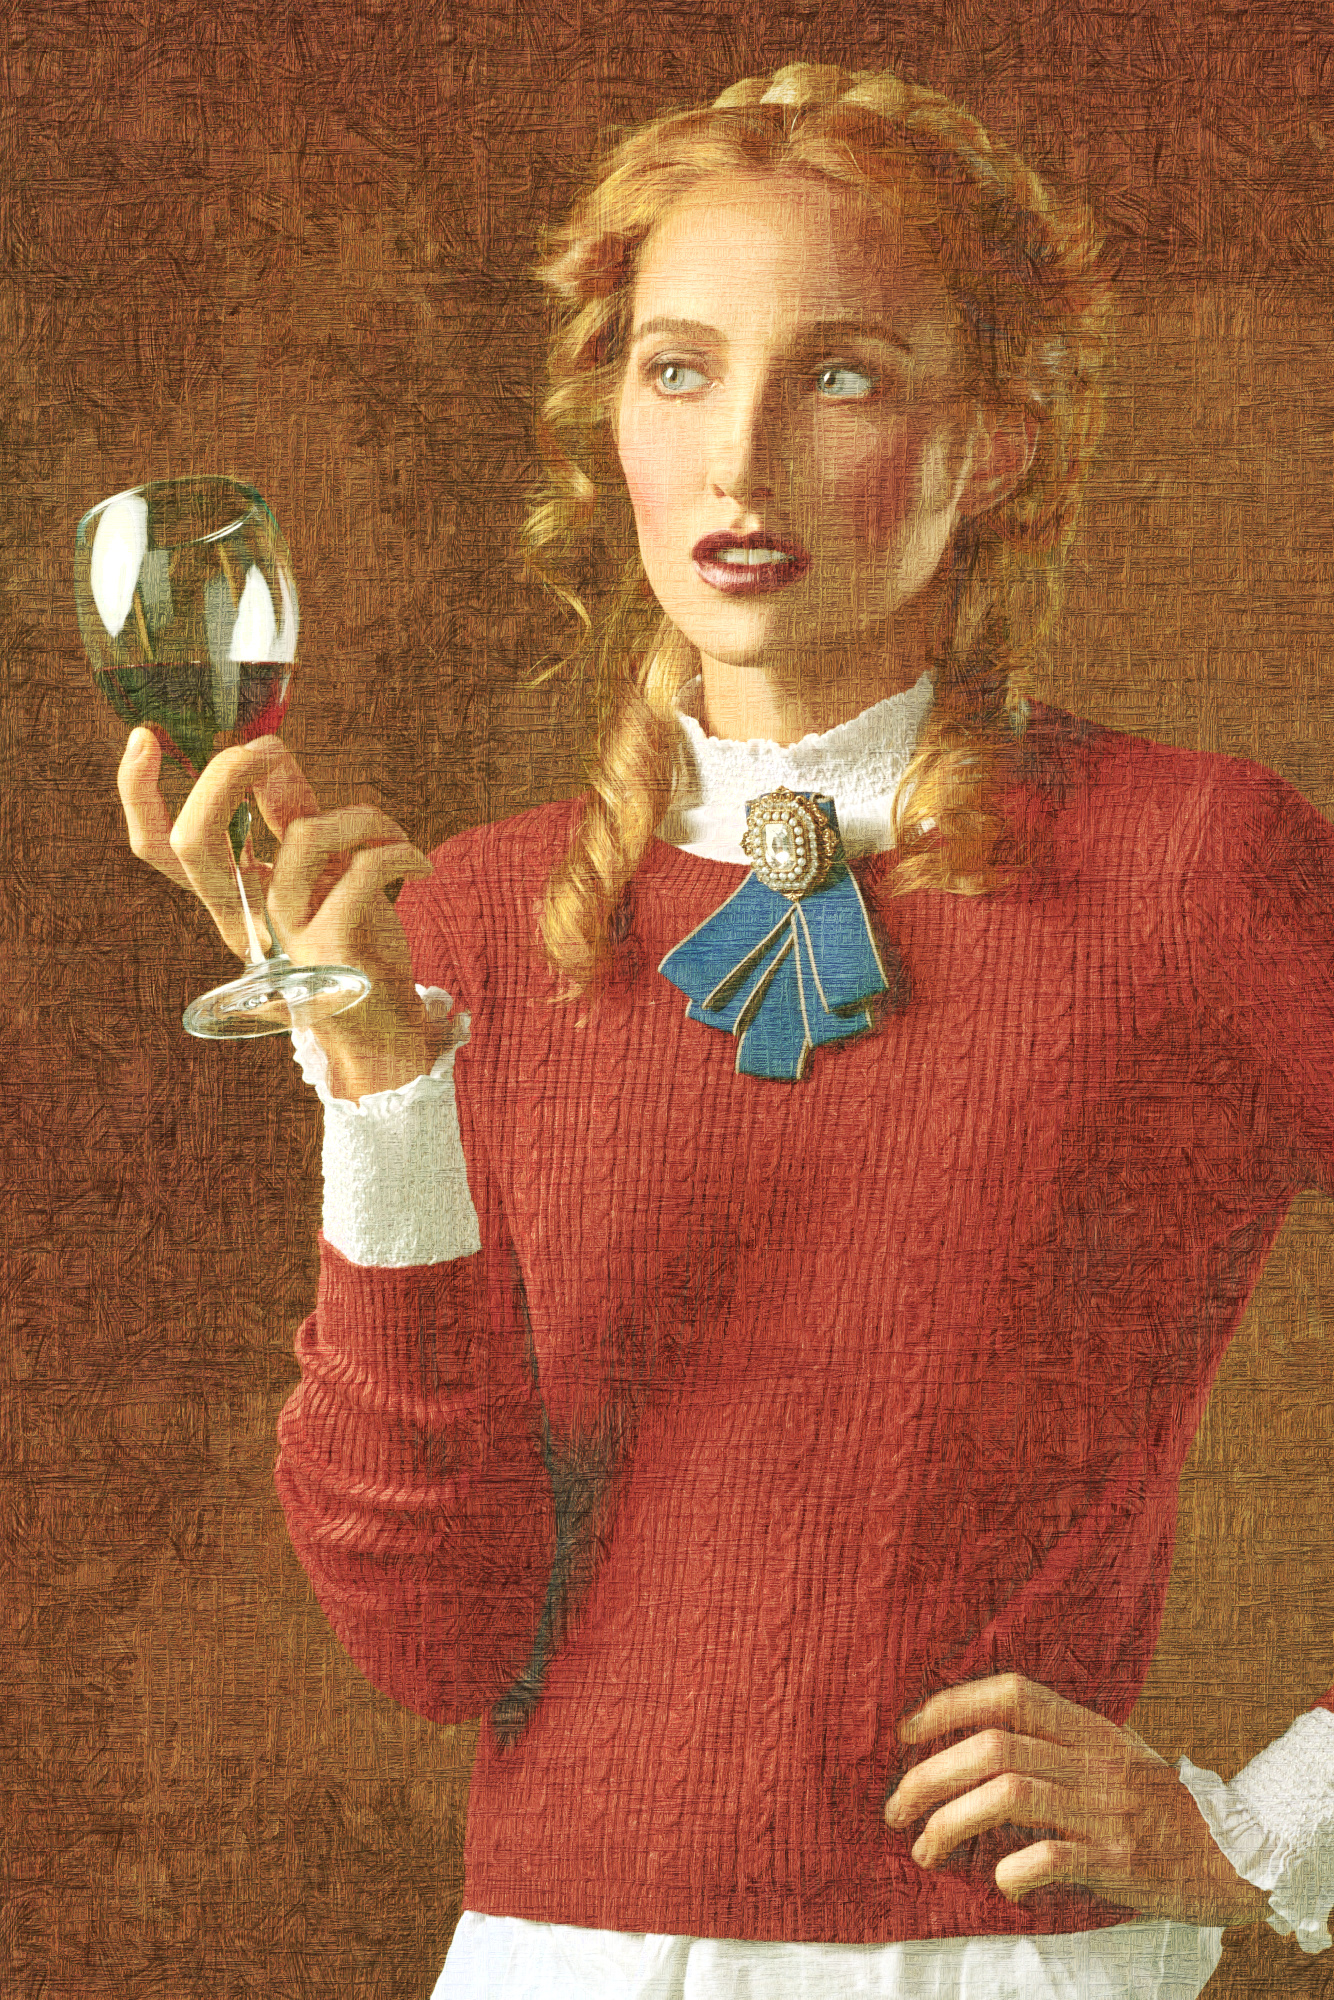 photo-of-woman-holding-wine-glass-2251185.jpg